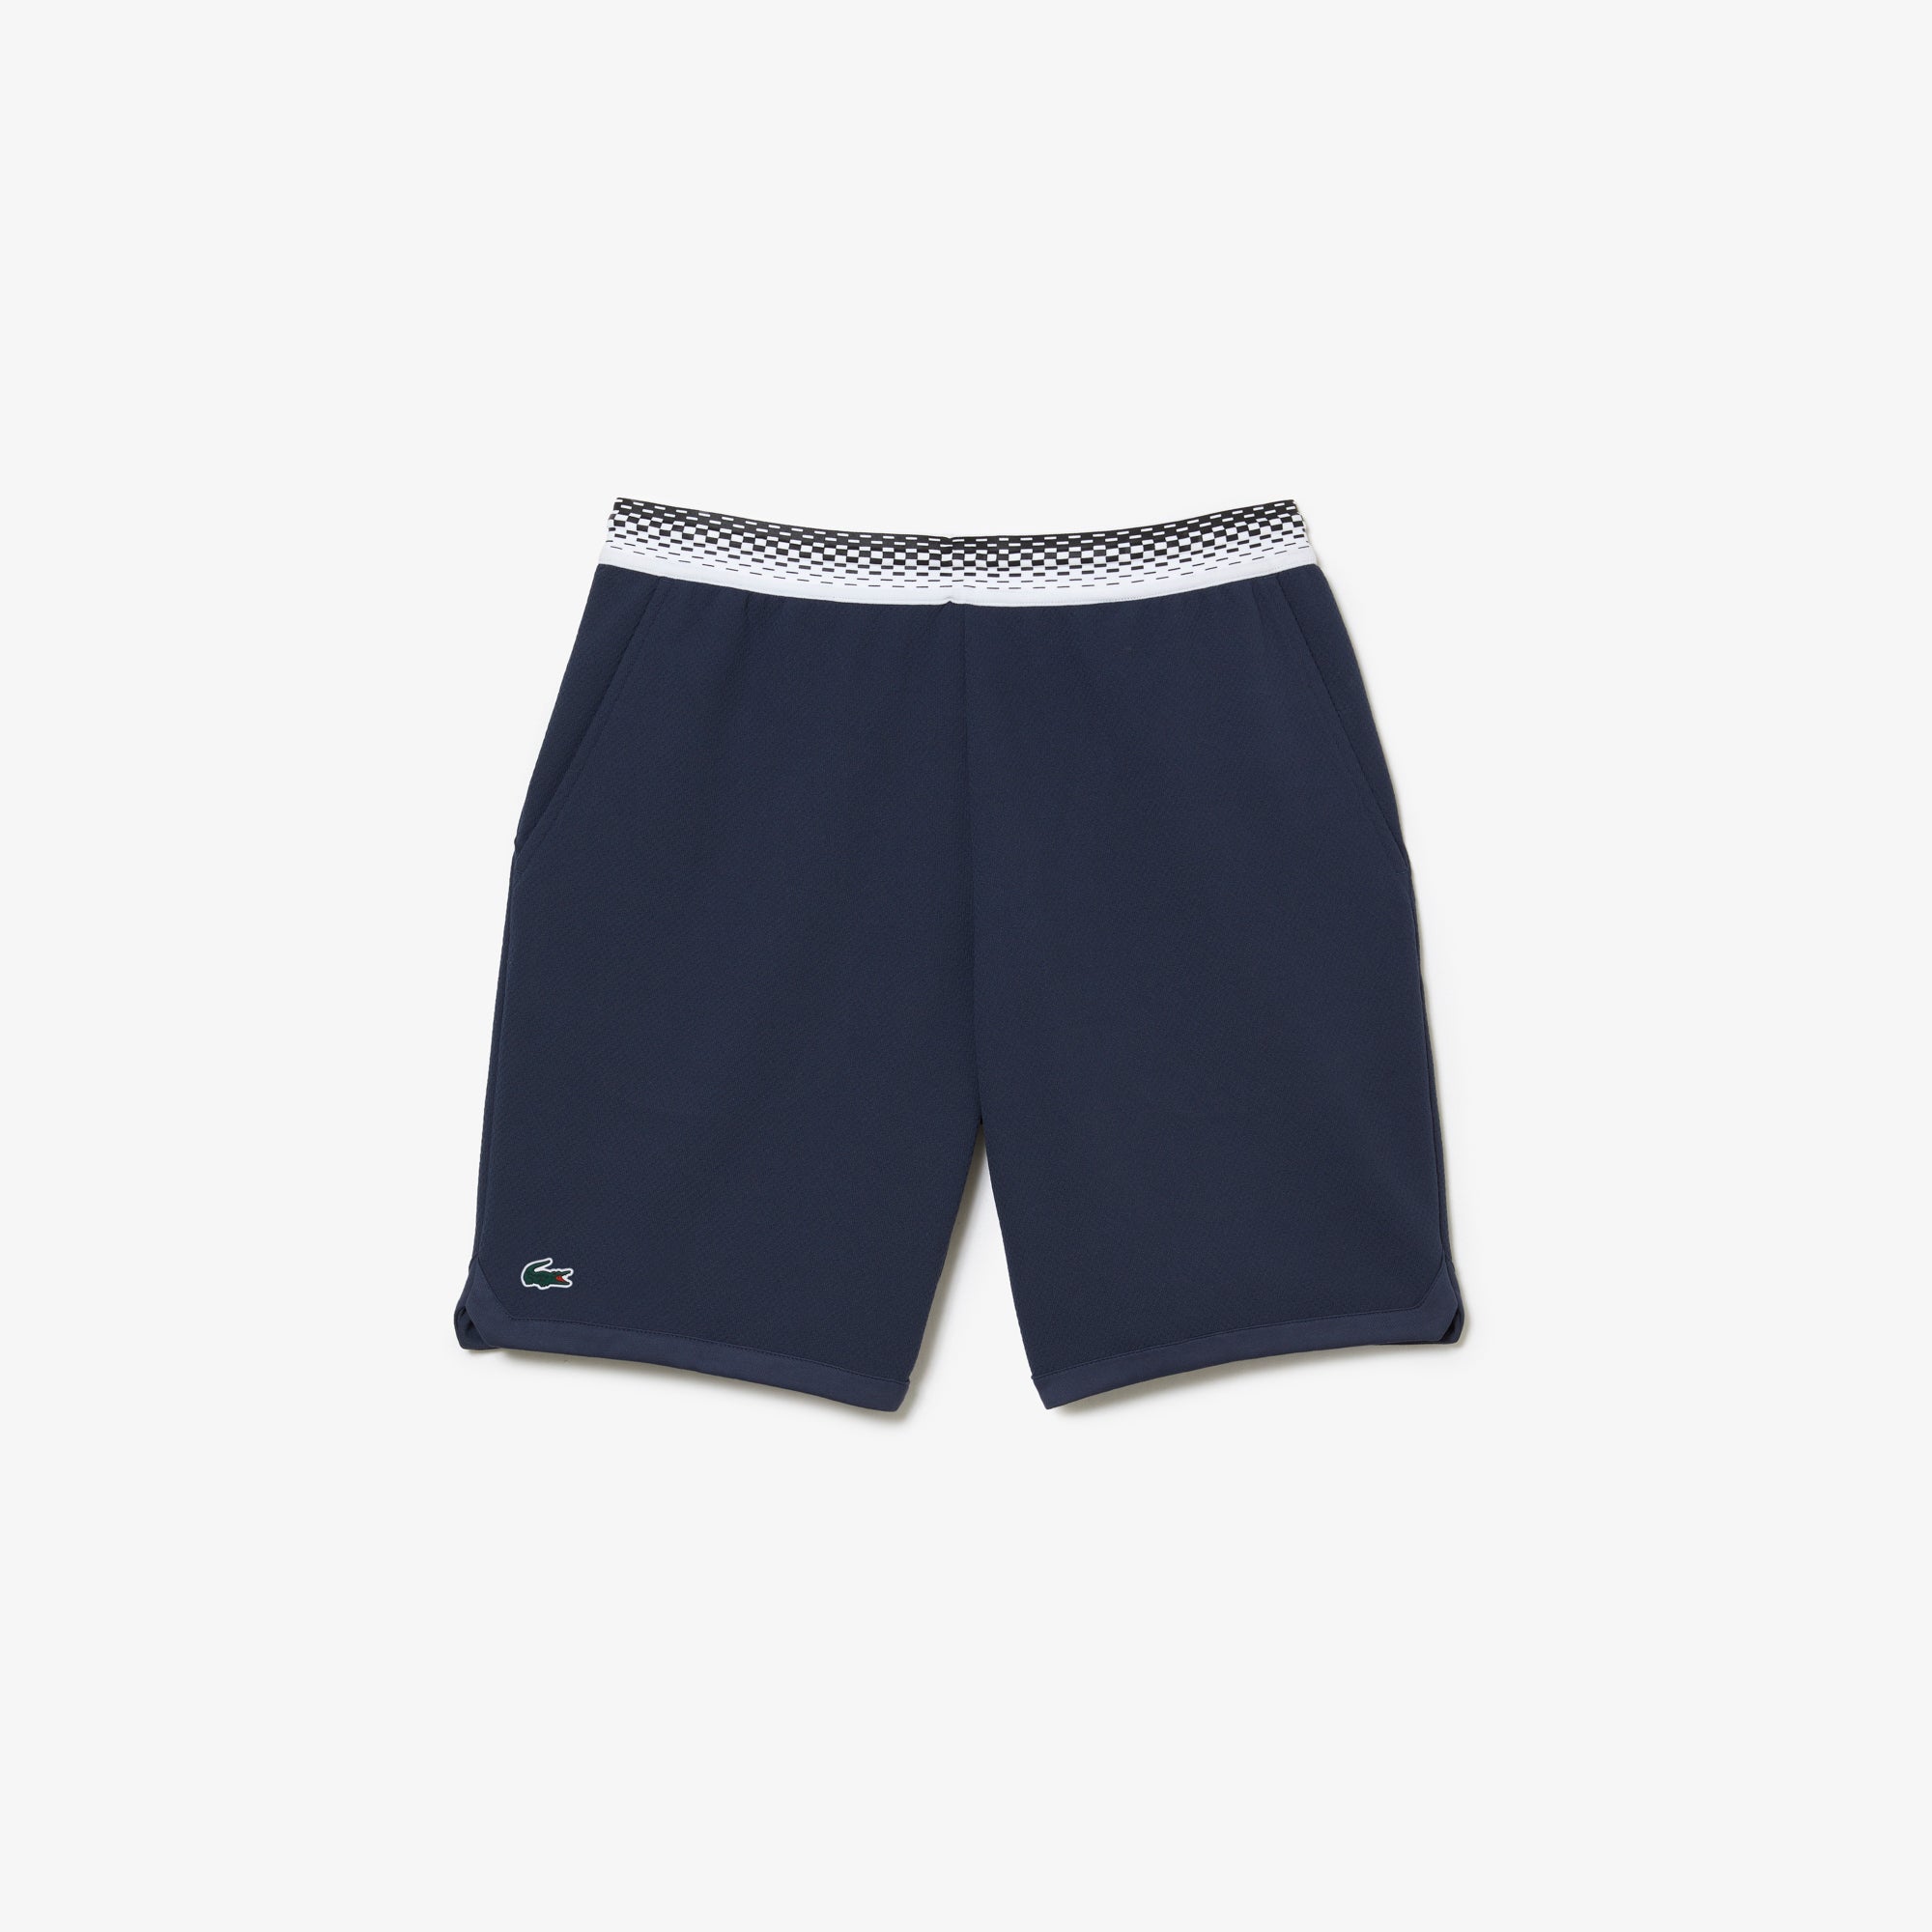 Lacoste Shorts (Night Blue) - XL